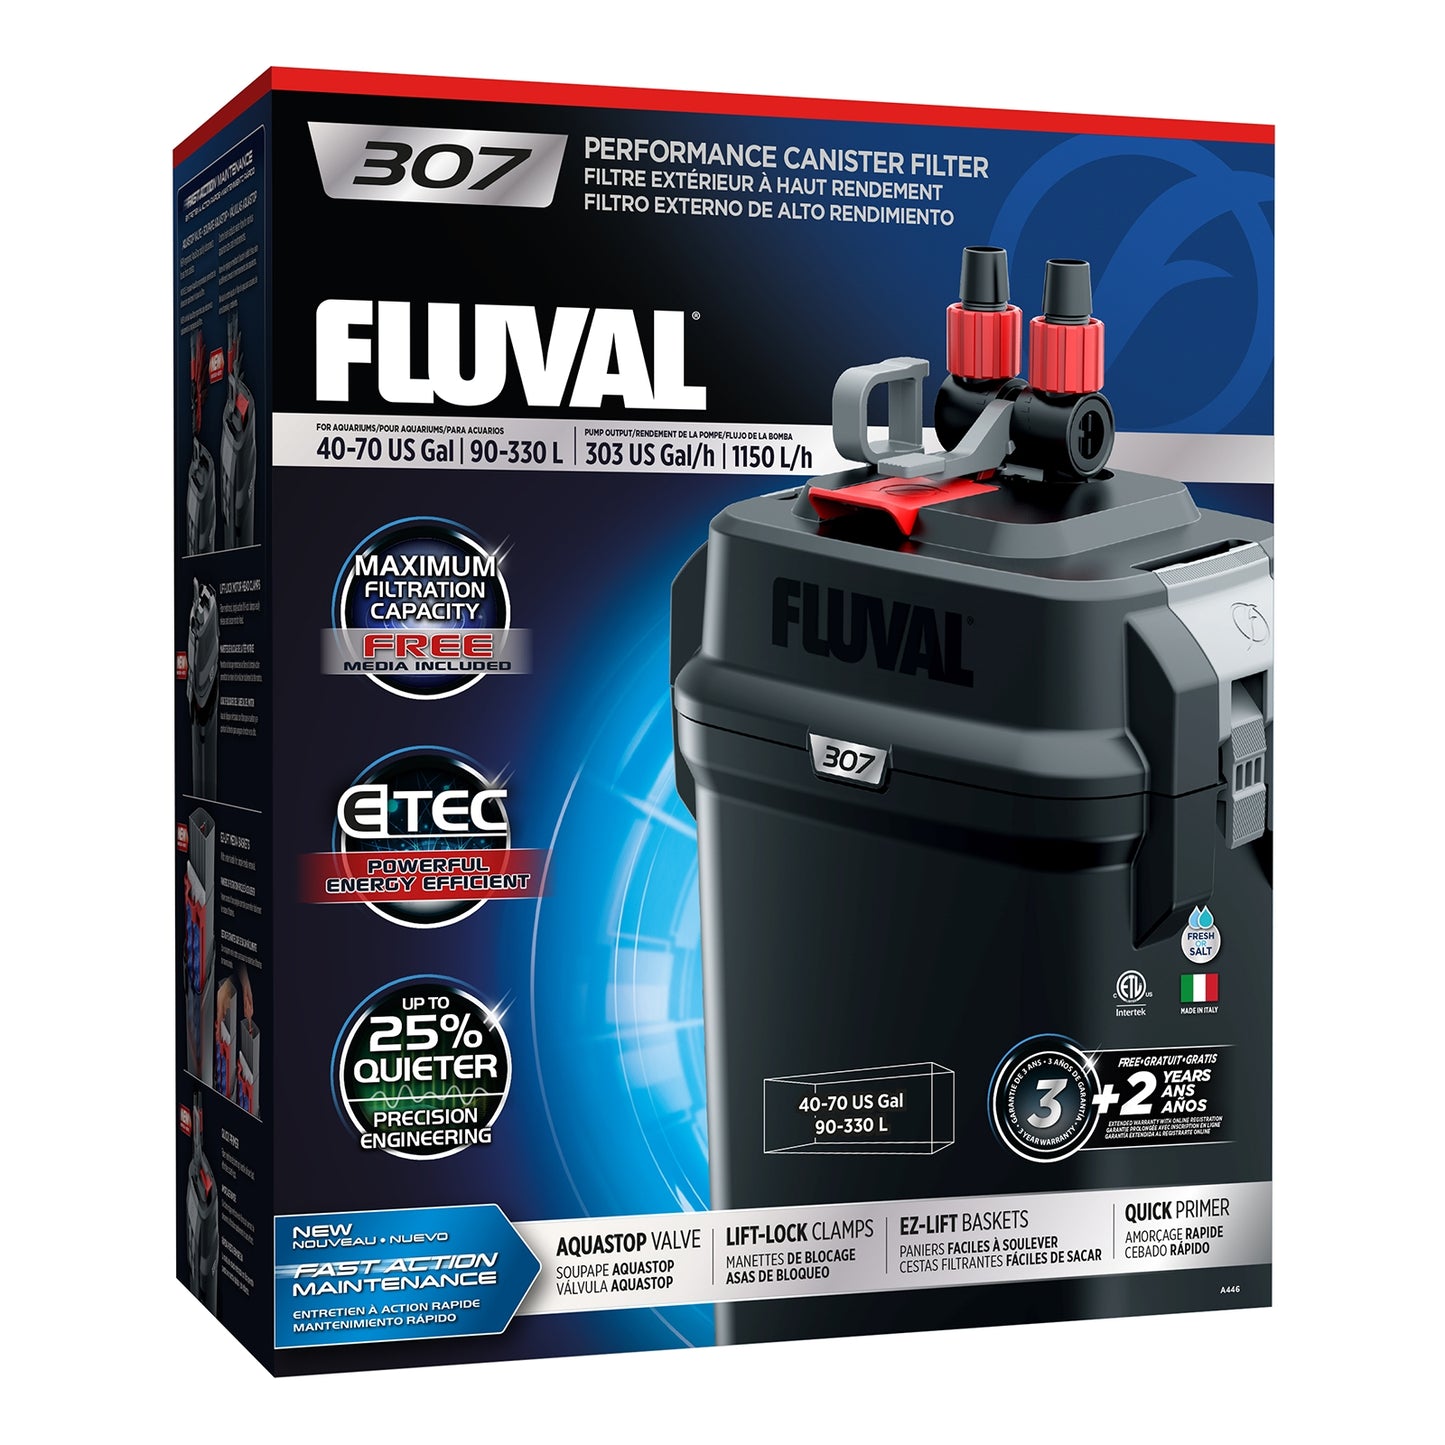 Fluval 307 External Filter (90-330 L)